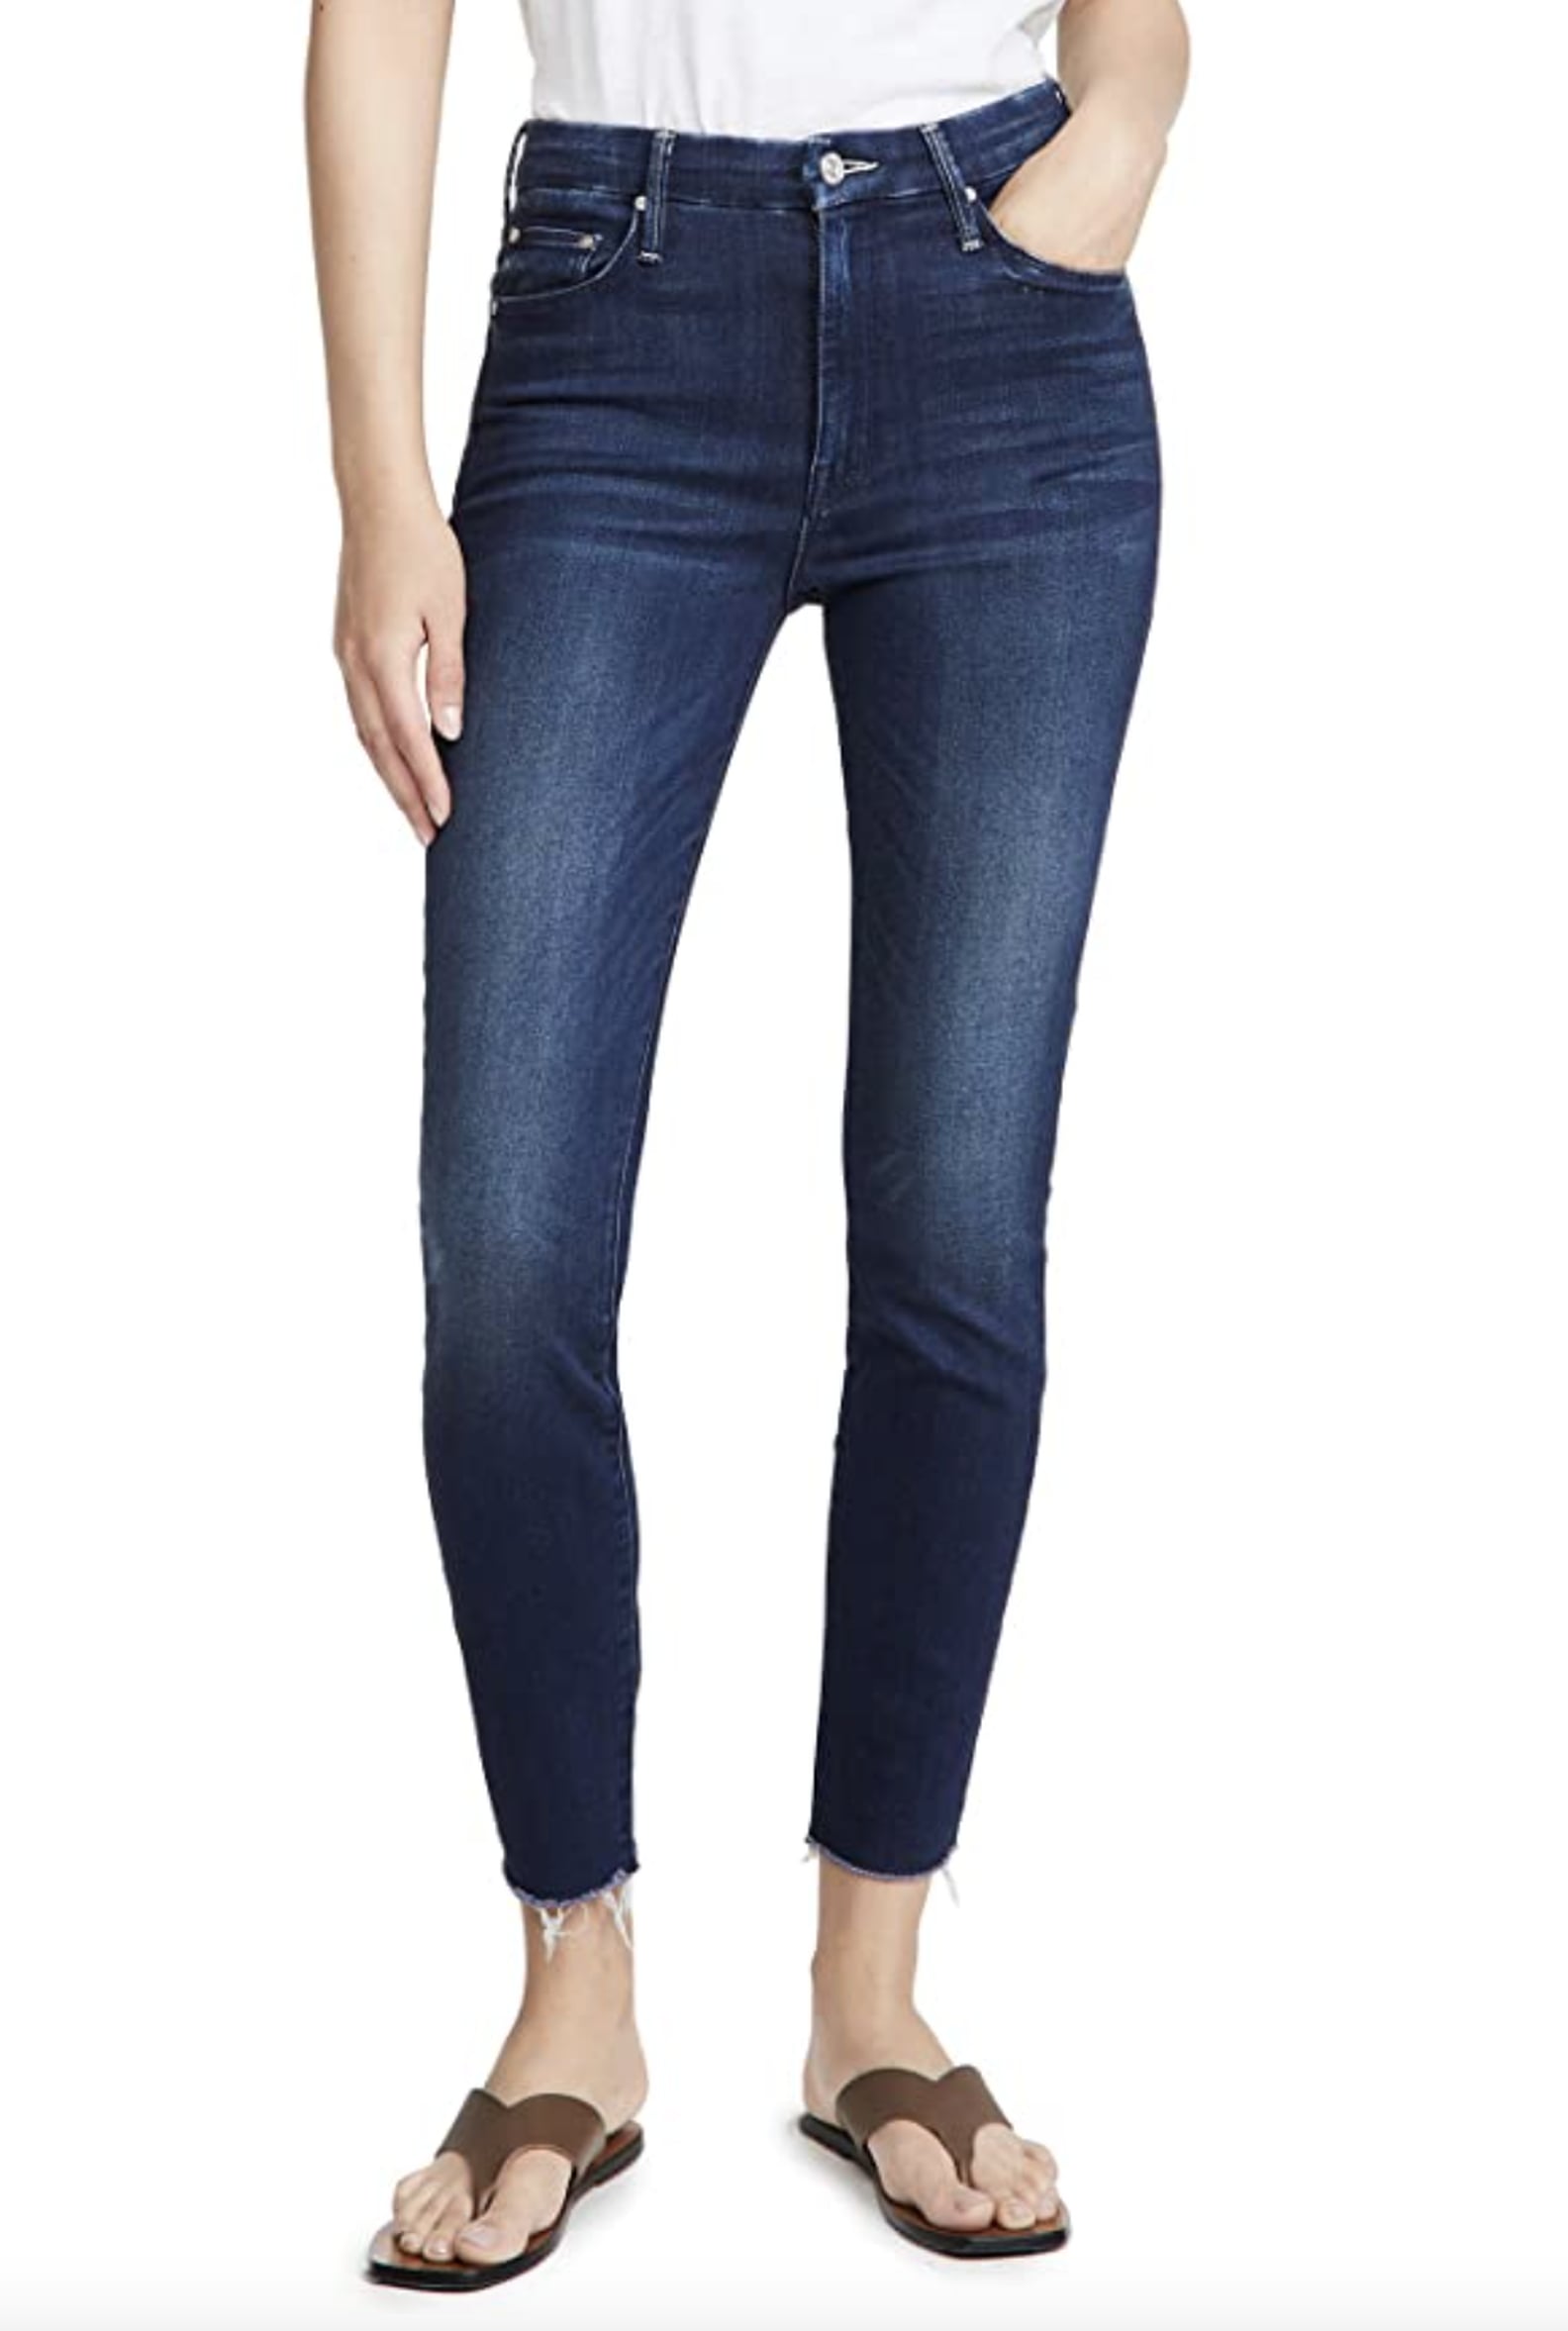 Best Jeans For Women on Amazon | POPSUGAR Fashion